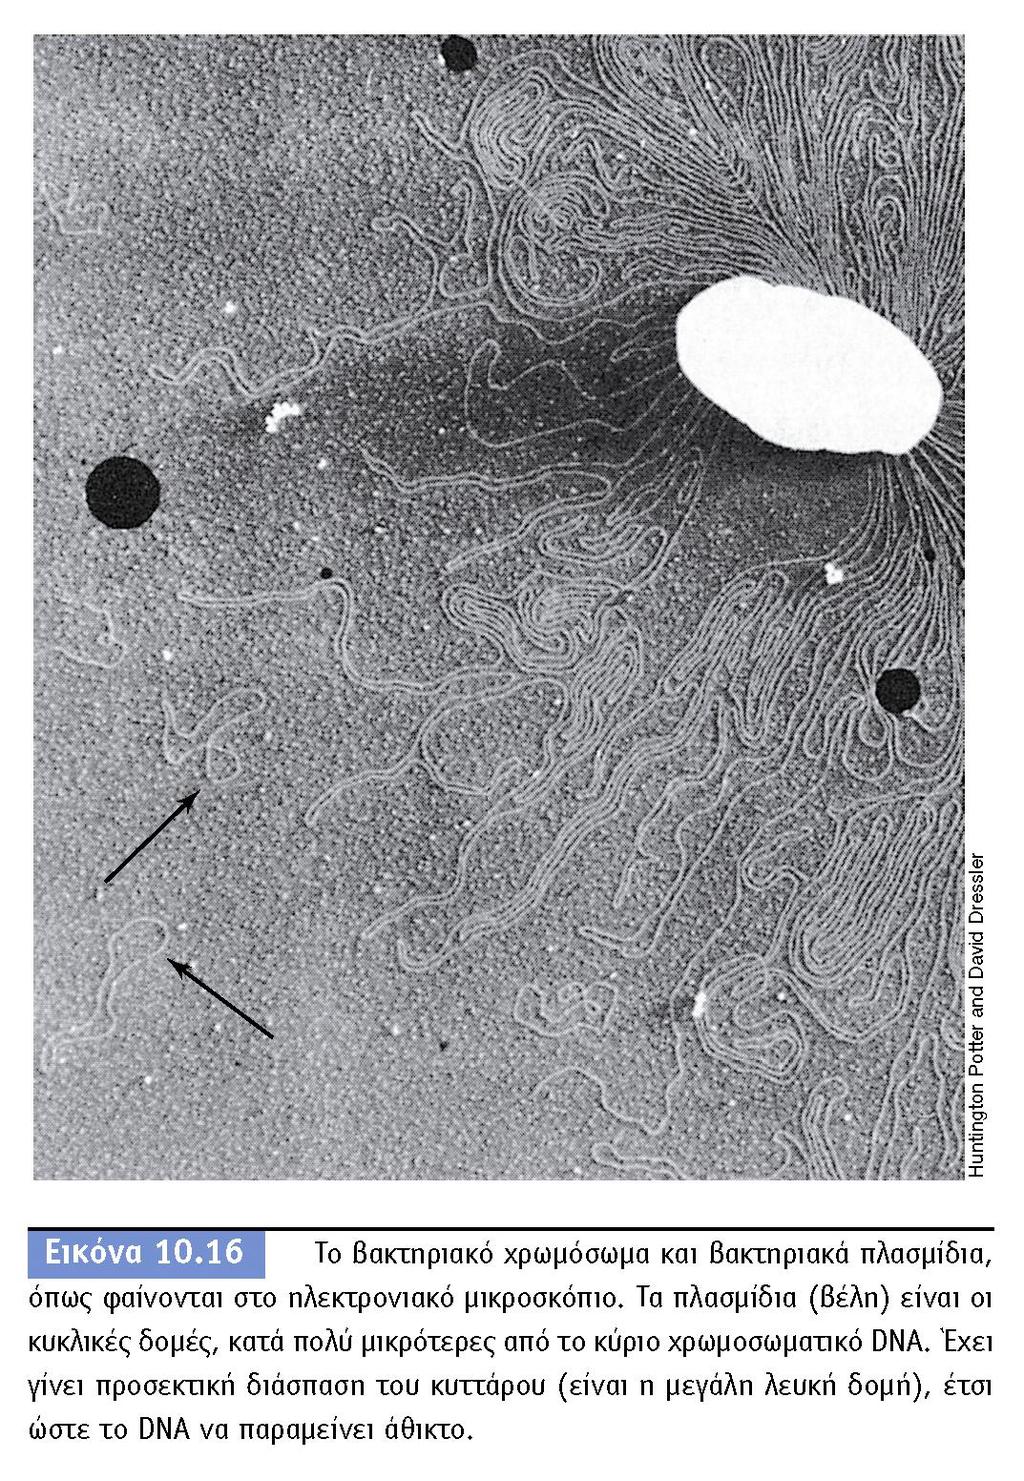 BIOΛOΓIA TΩN MIKPOOPΓANIΣMΩN ΠANEΠIΣTHMIAKEΣ EKΔOΣEIΣ KPHTHΣ 54 Βακτηριακό χρωμόσωμα Πλασμίδια: κυκλικά